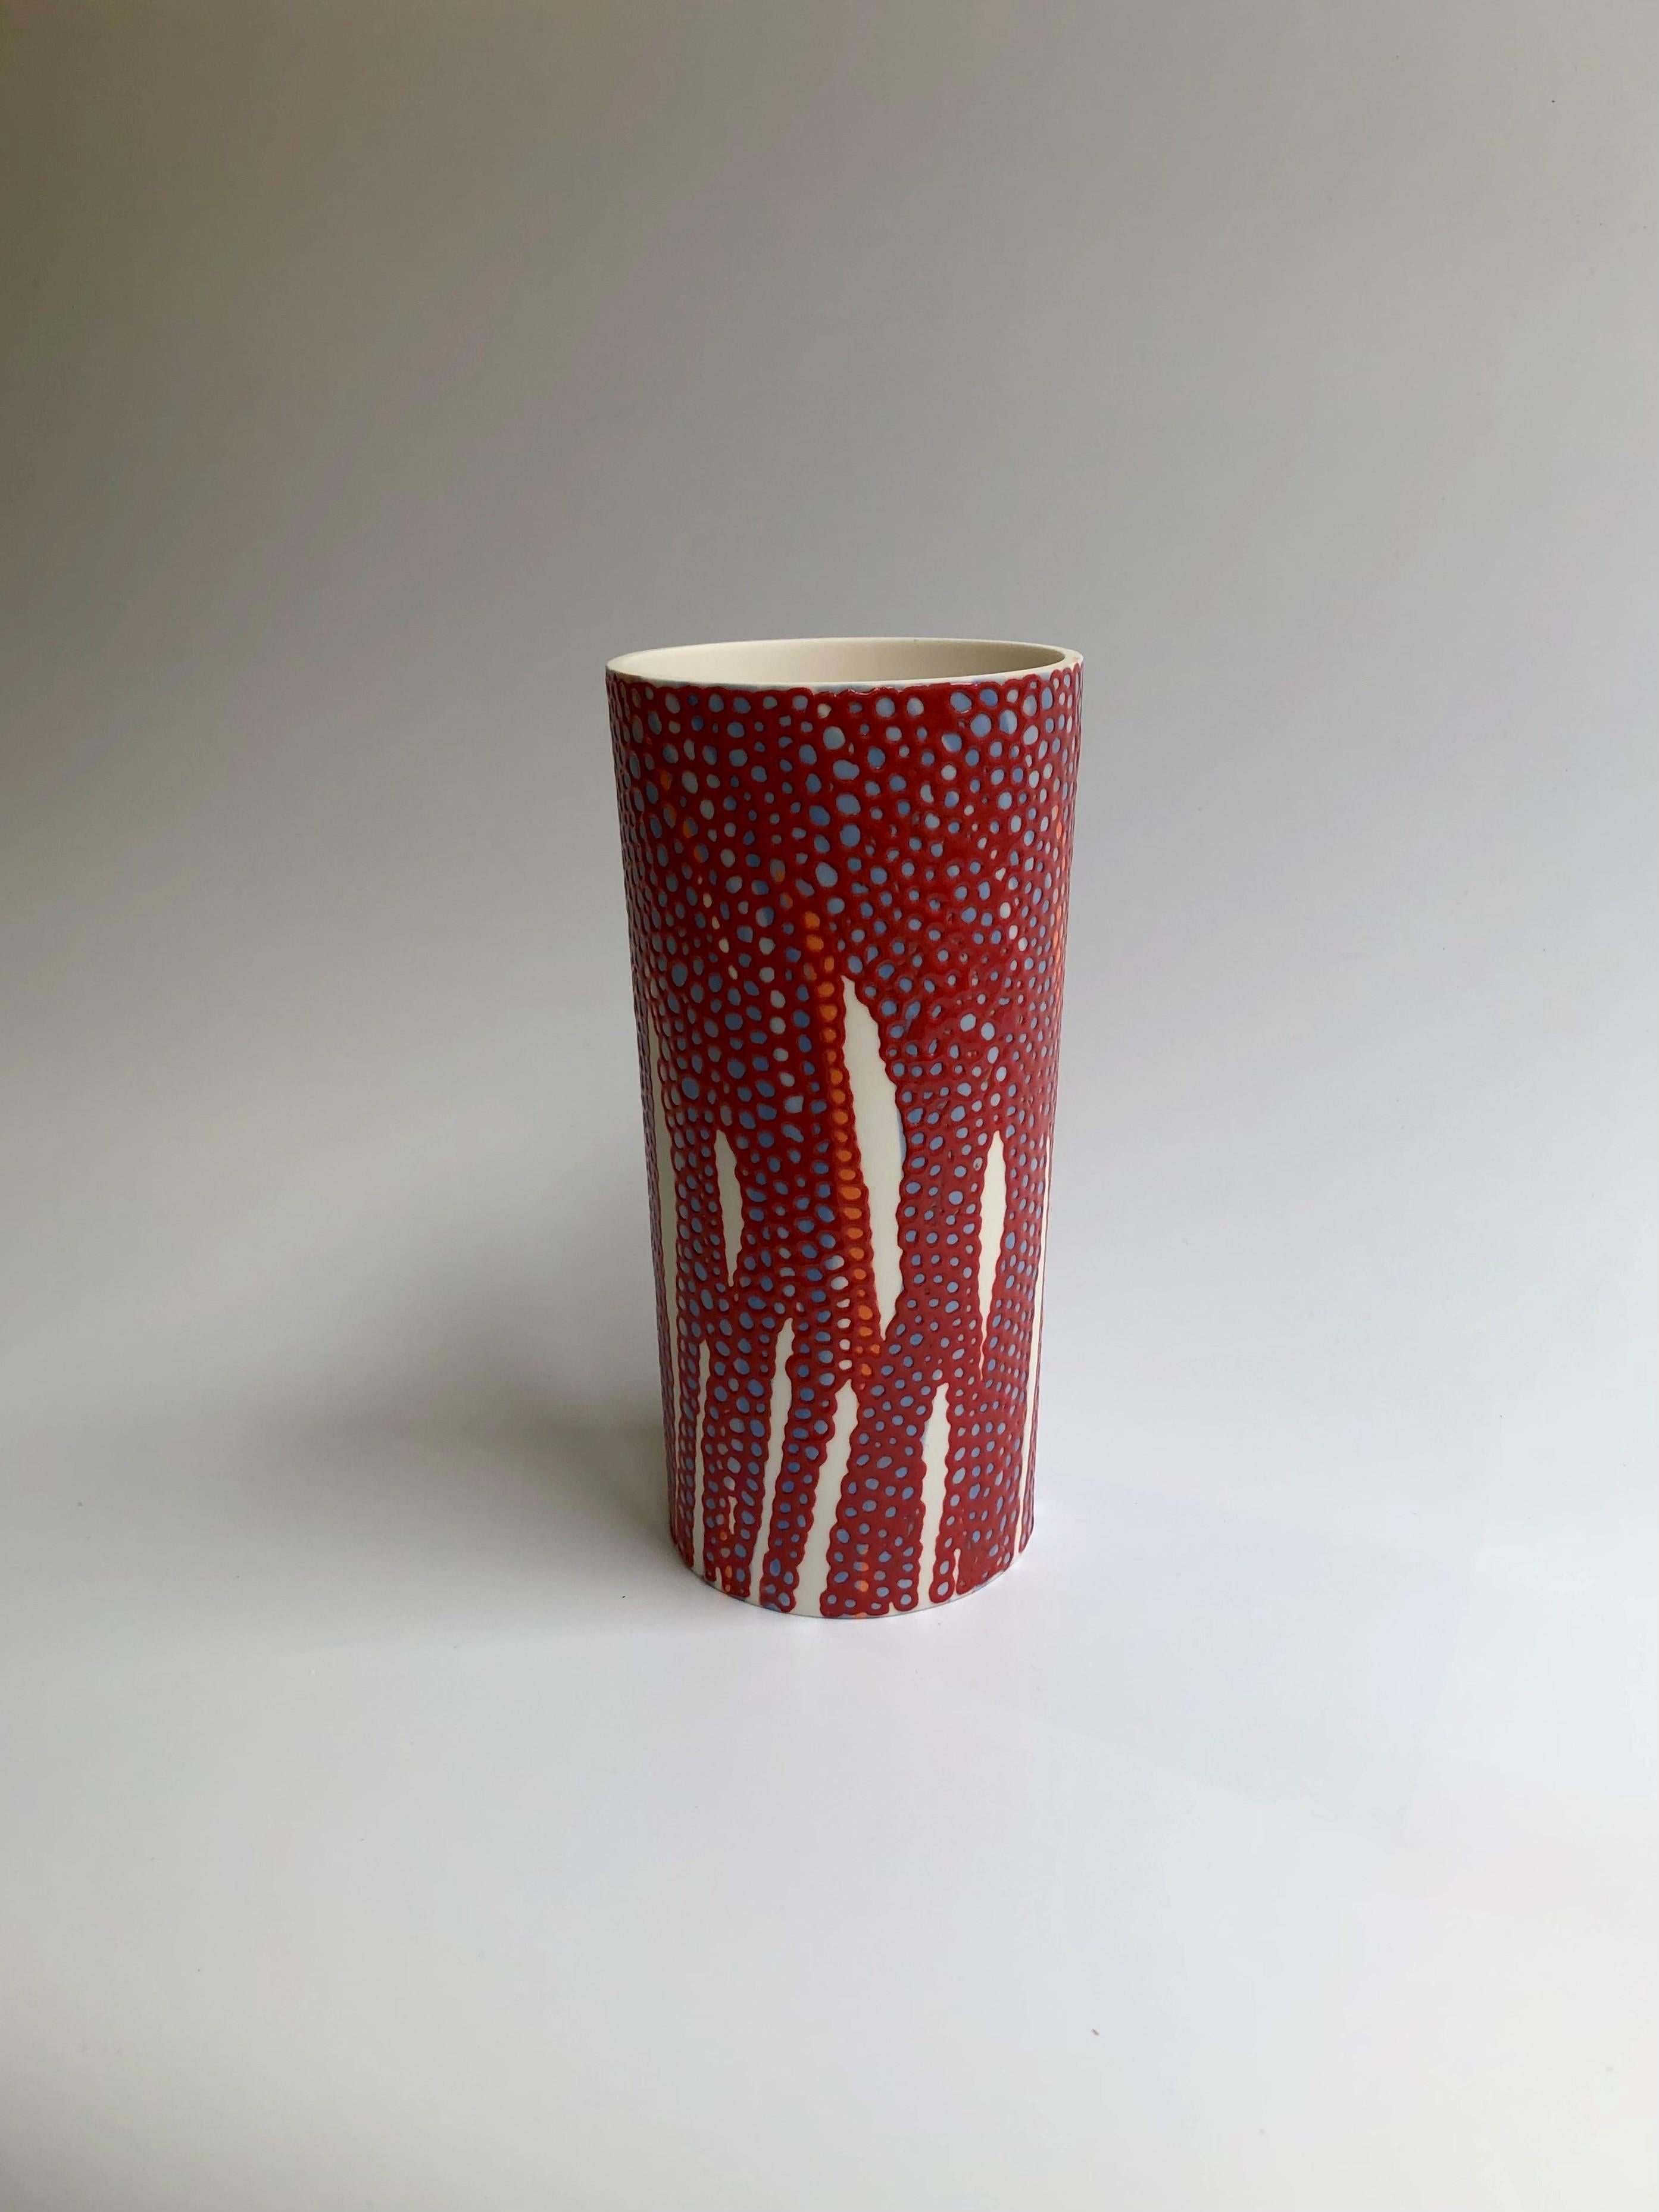 British Porcelain Vase by Eugenio Michelini Unique Parianware Contemporary 21st Century For Sale